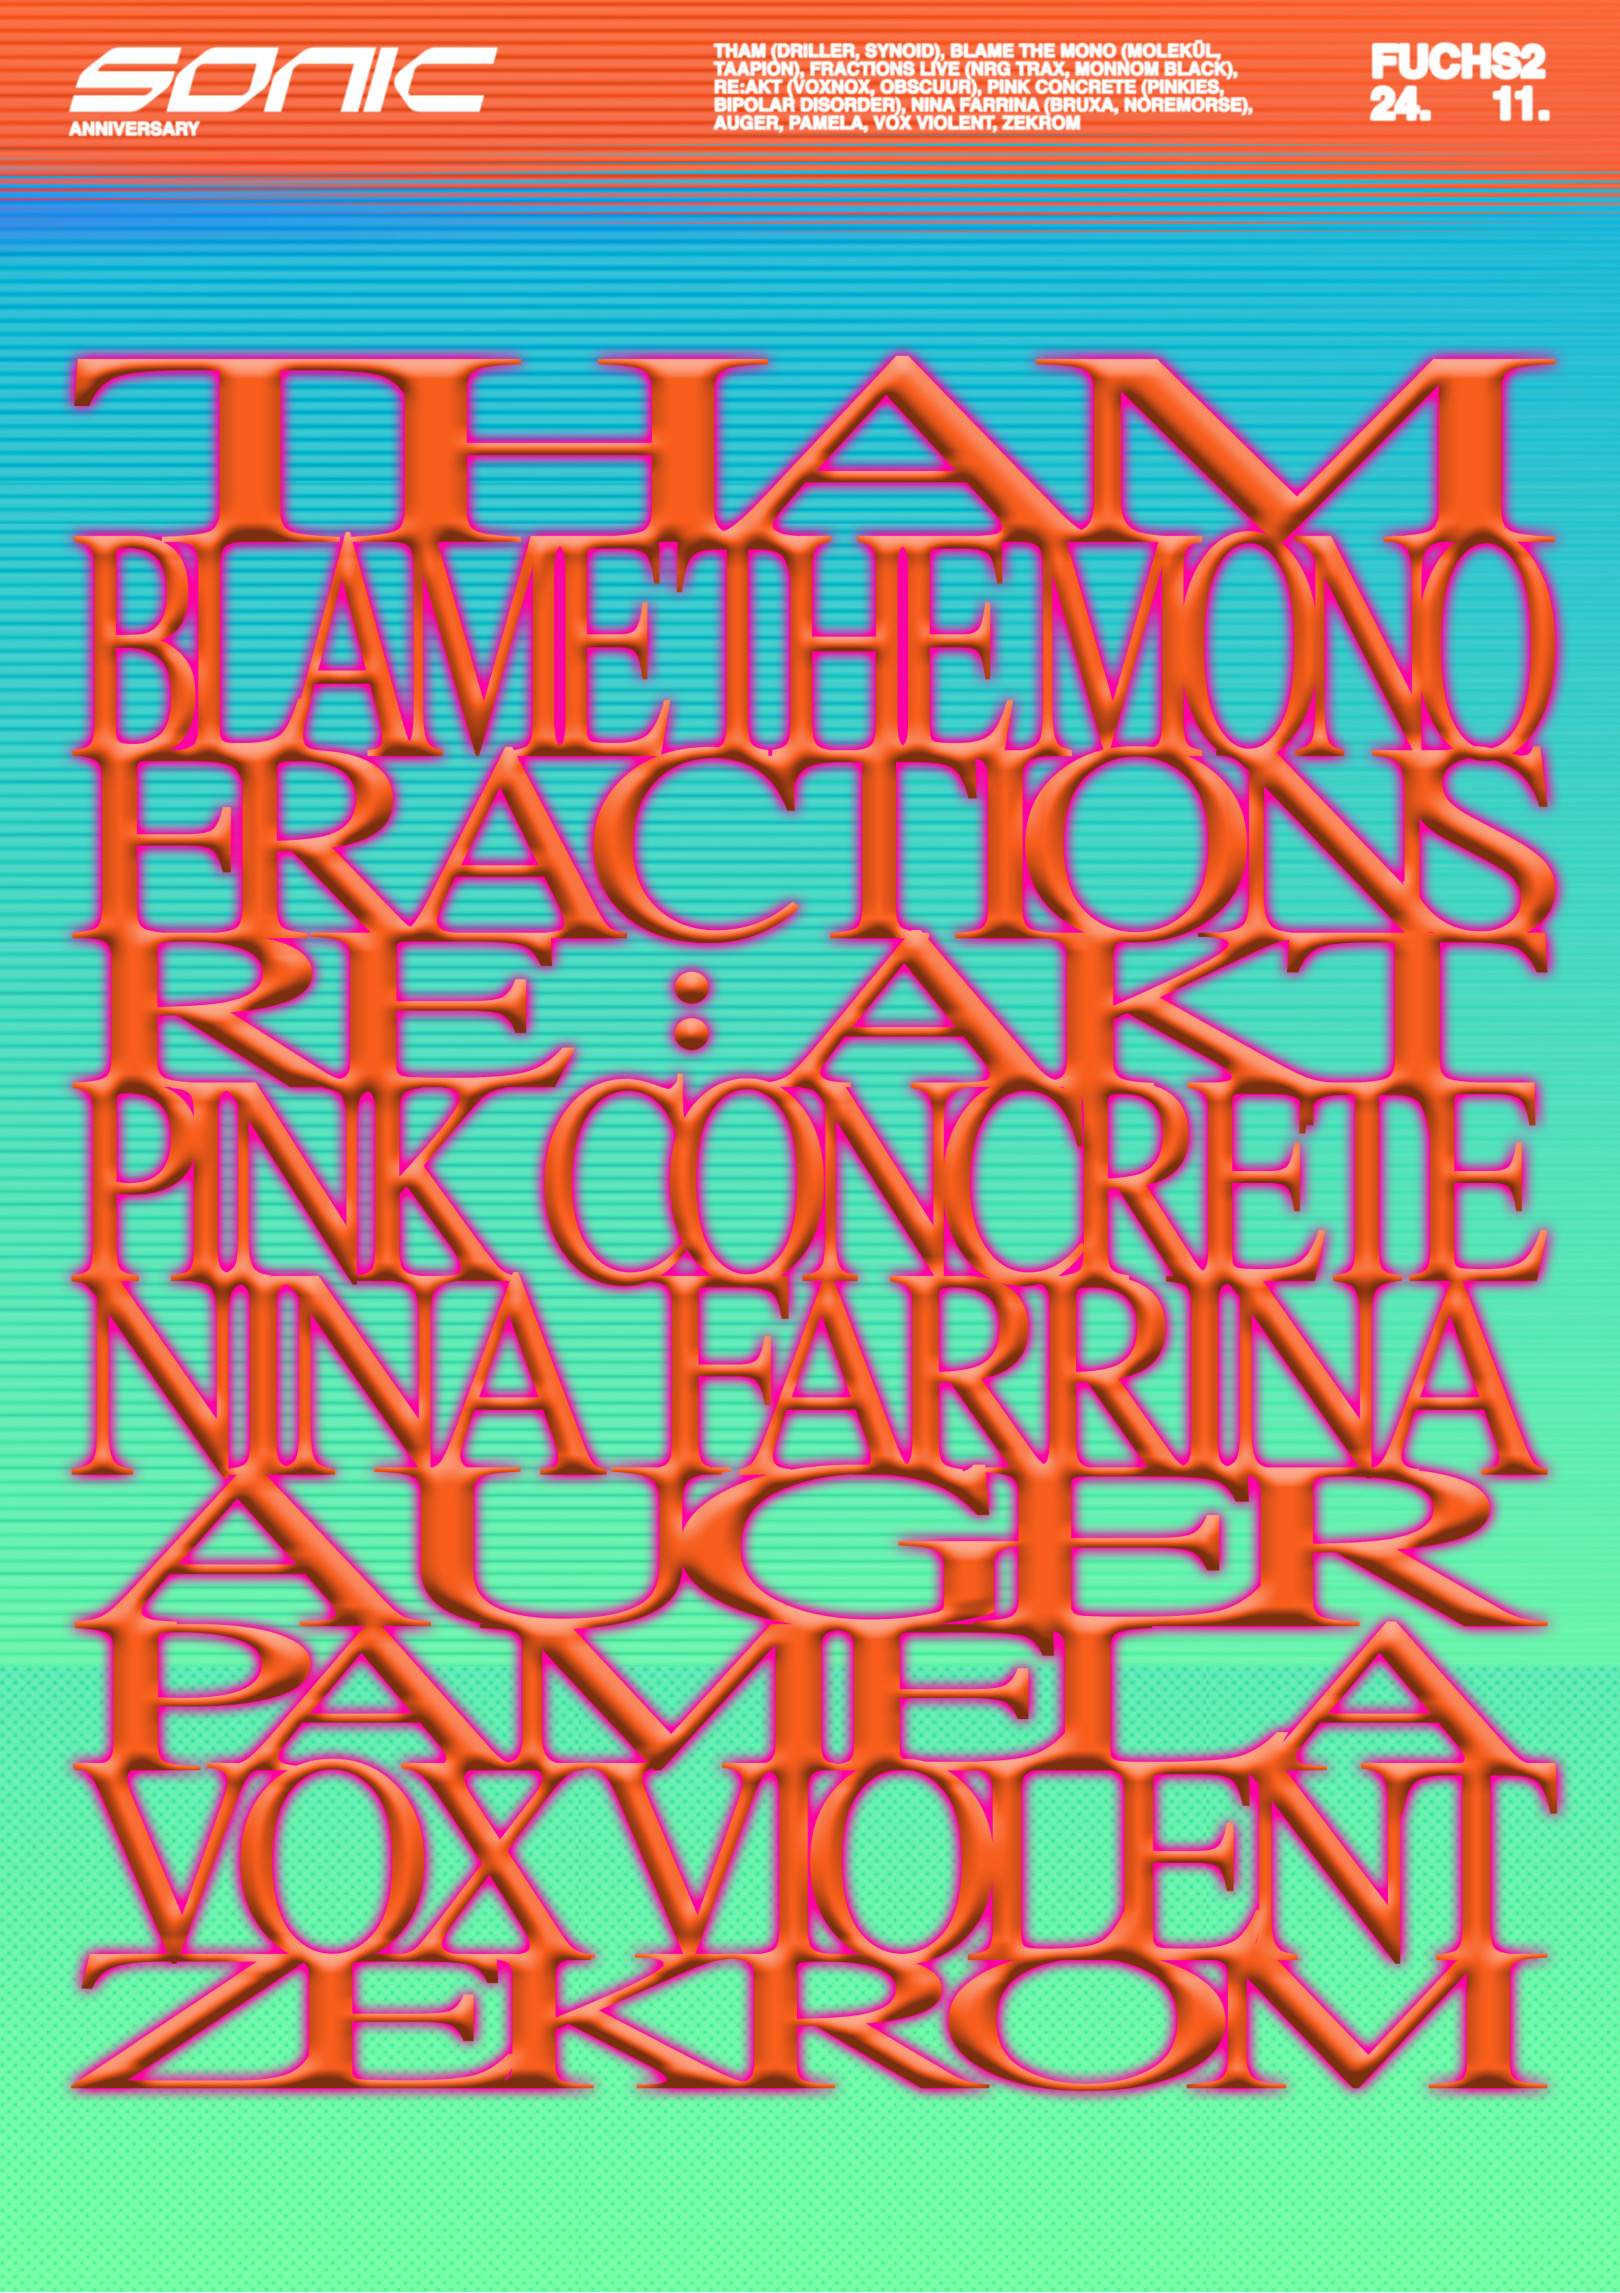 Sonic: Tham (DE), Blame The Mono (FR), re:akt (DE), Fractions, Pink Concrete, Nina Farrina - フライヤー表